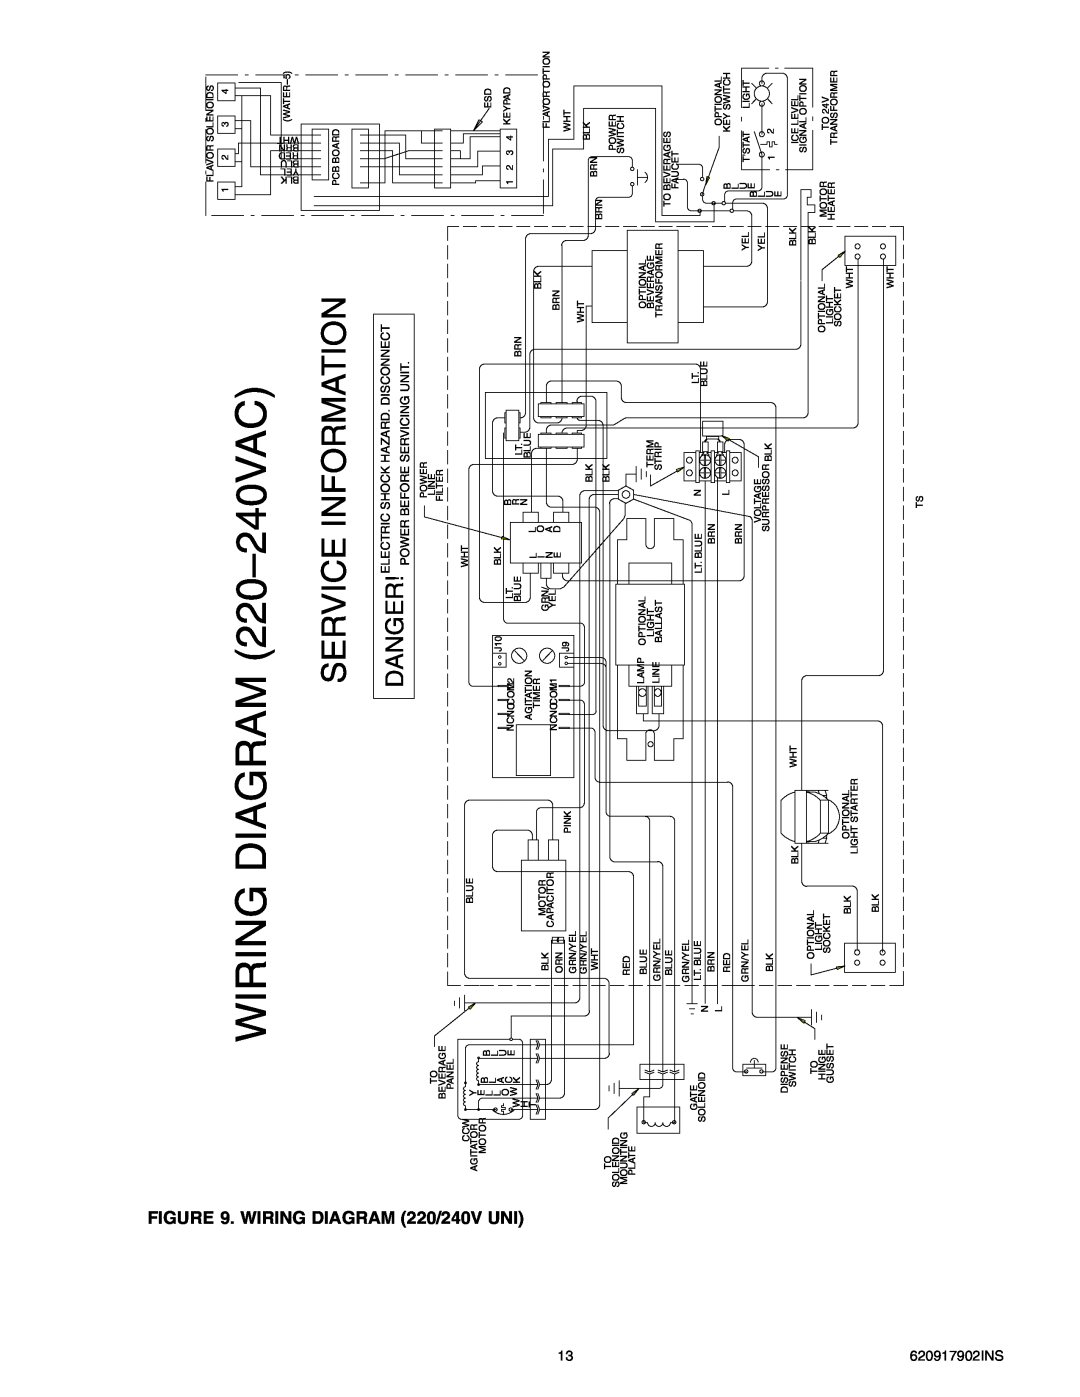 Cornelius ENDURO-175 WIRING DIAGRAM 220-240VAC, Service Information, Danger, Electric Shock Hazard. Disconnect 